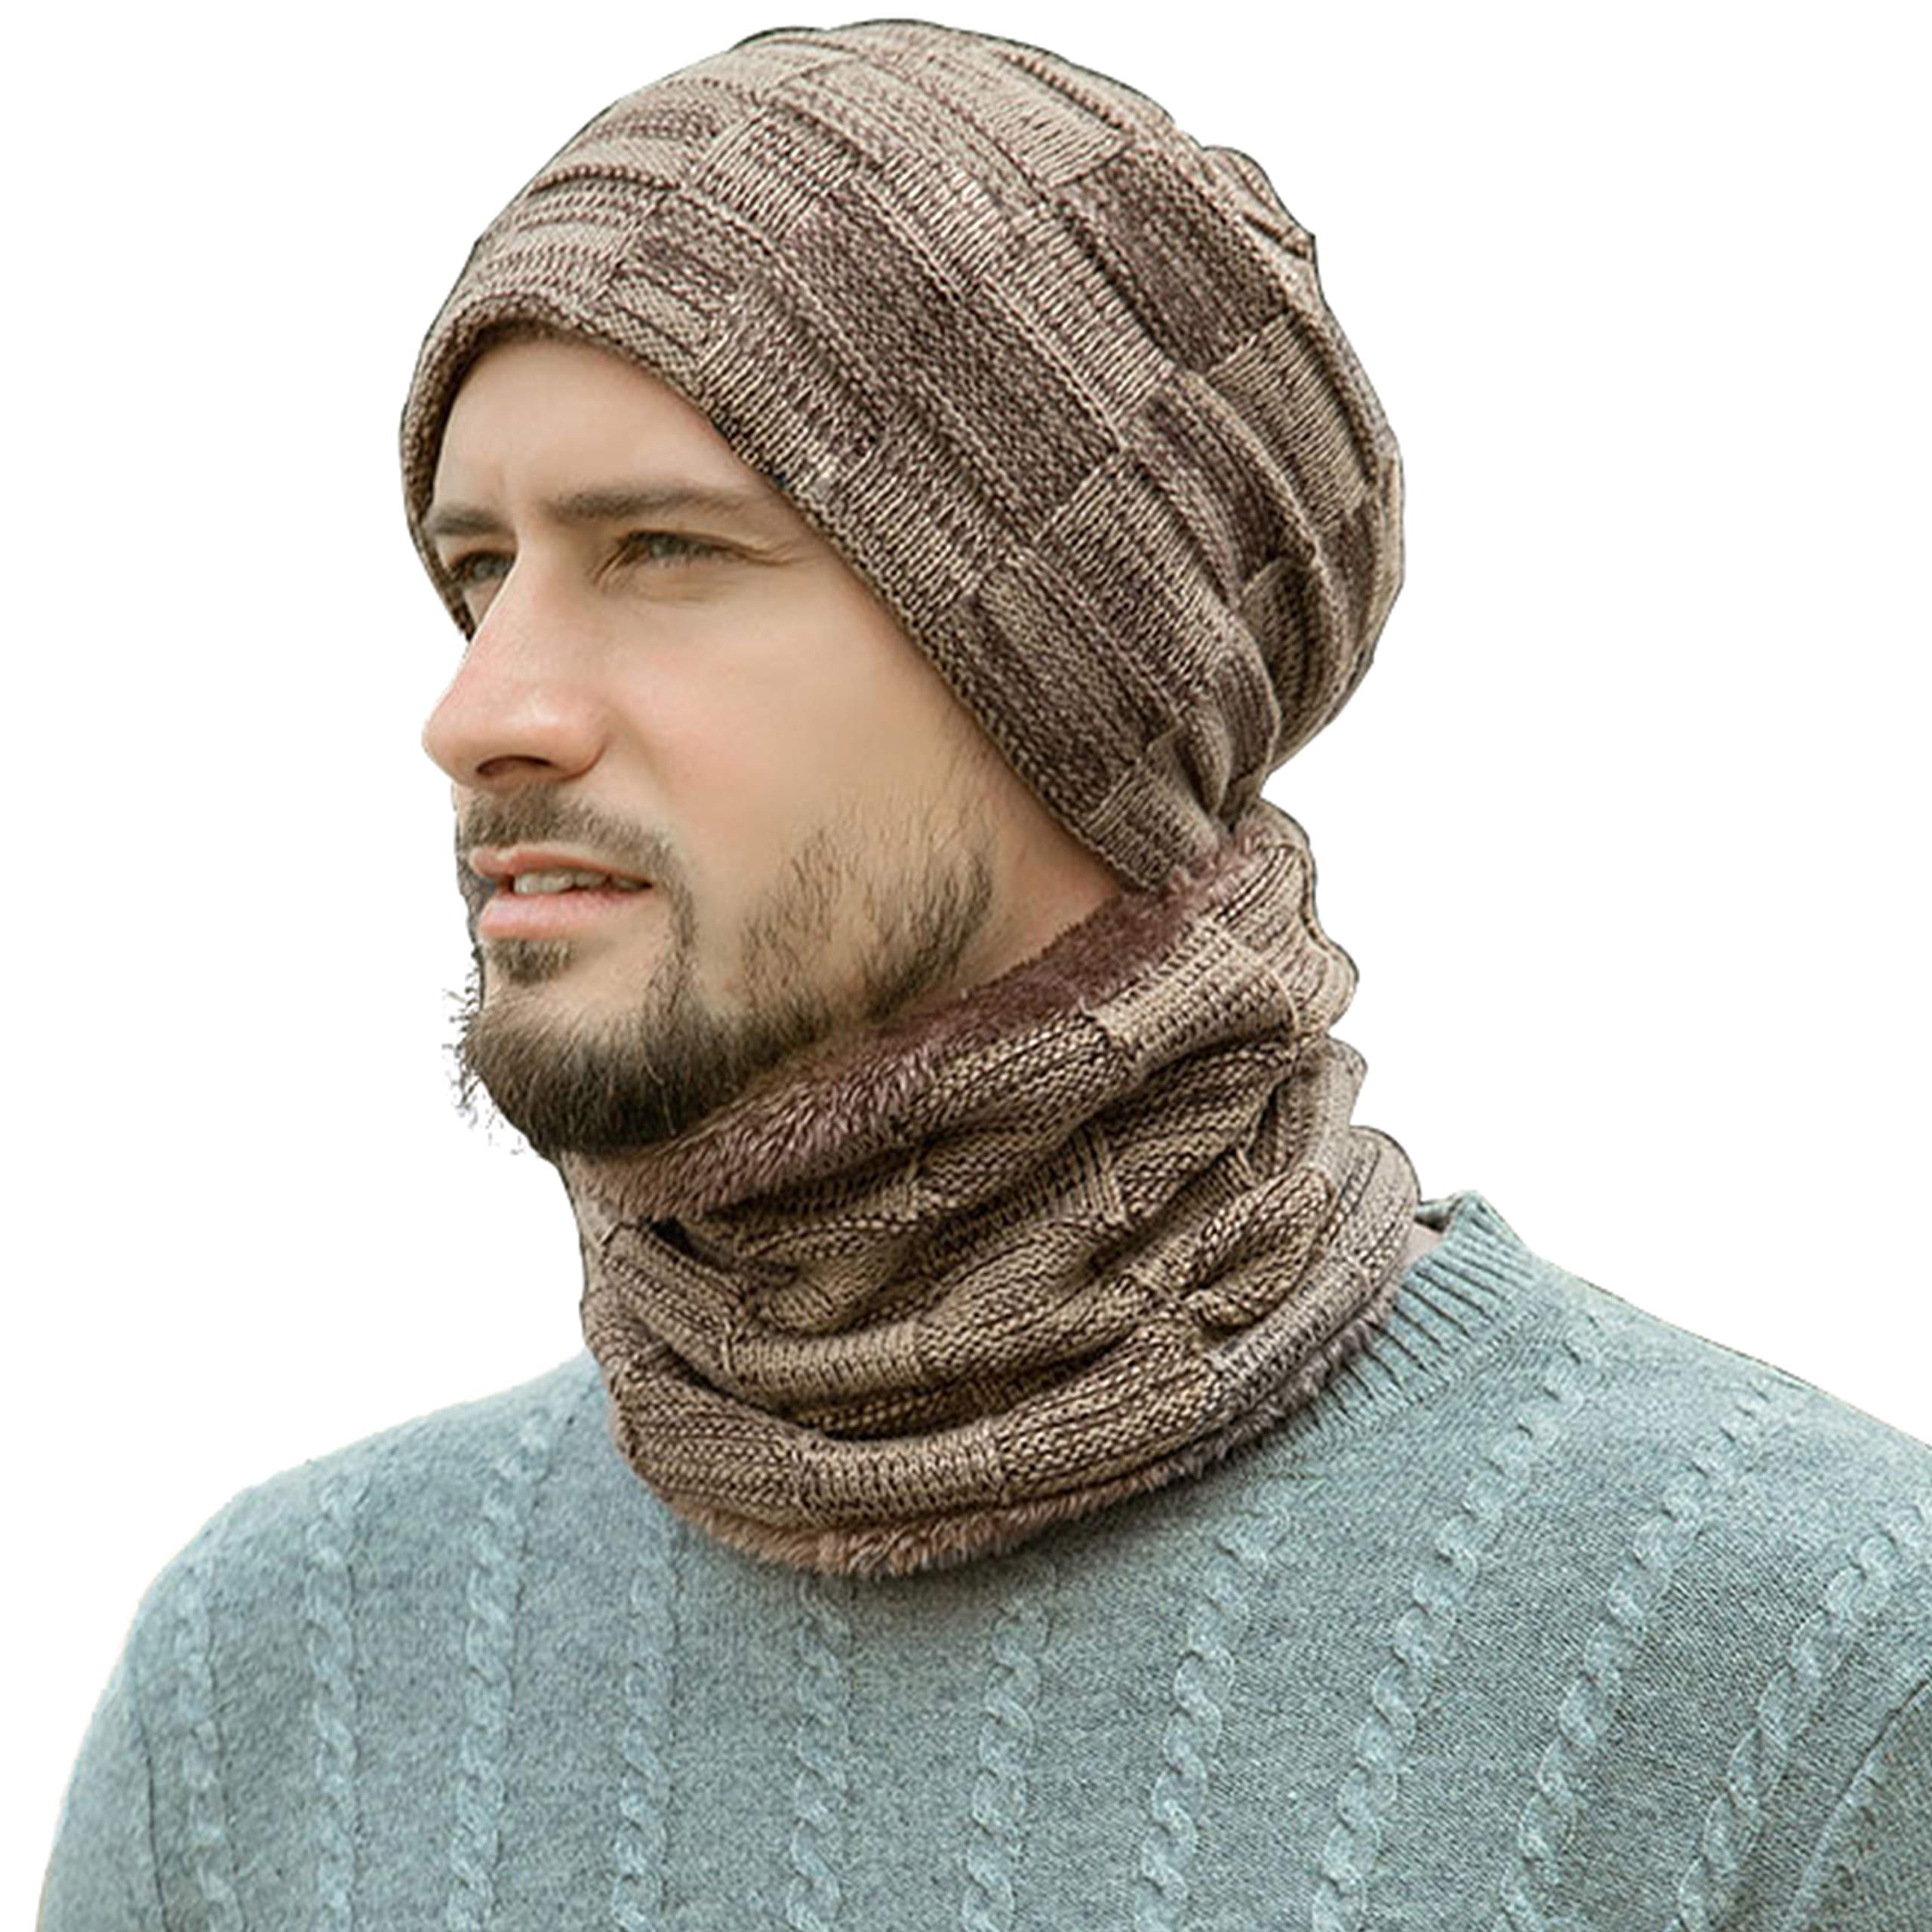 Winter Beanie Hat Scarf Set for Men Women, Warm Fleece Lined Knit Hat Skull Cap Thick Neck Warmer Winter Gift Set Khaki